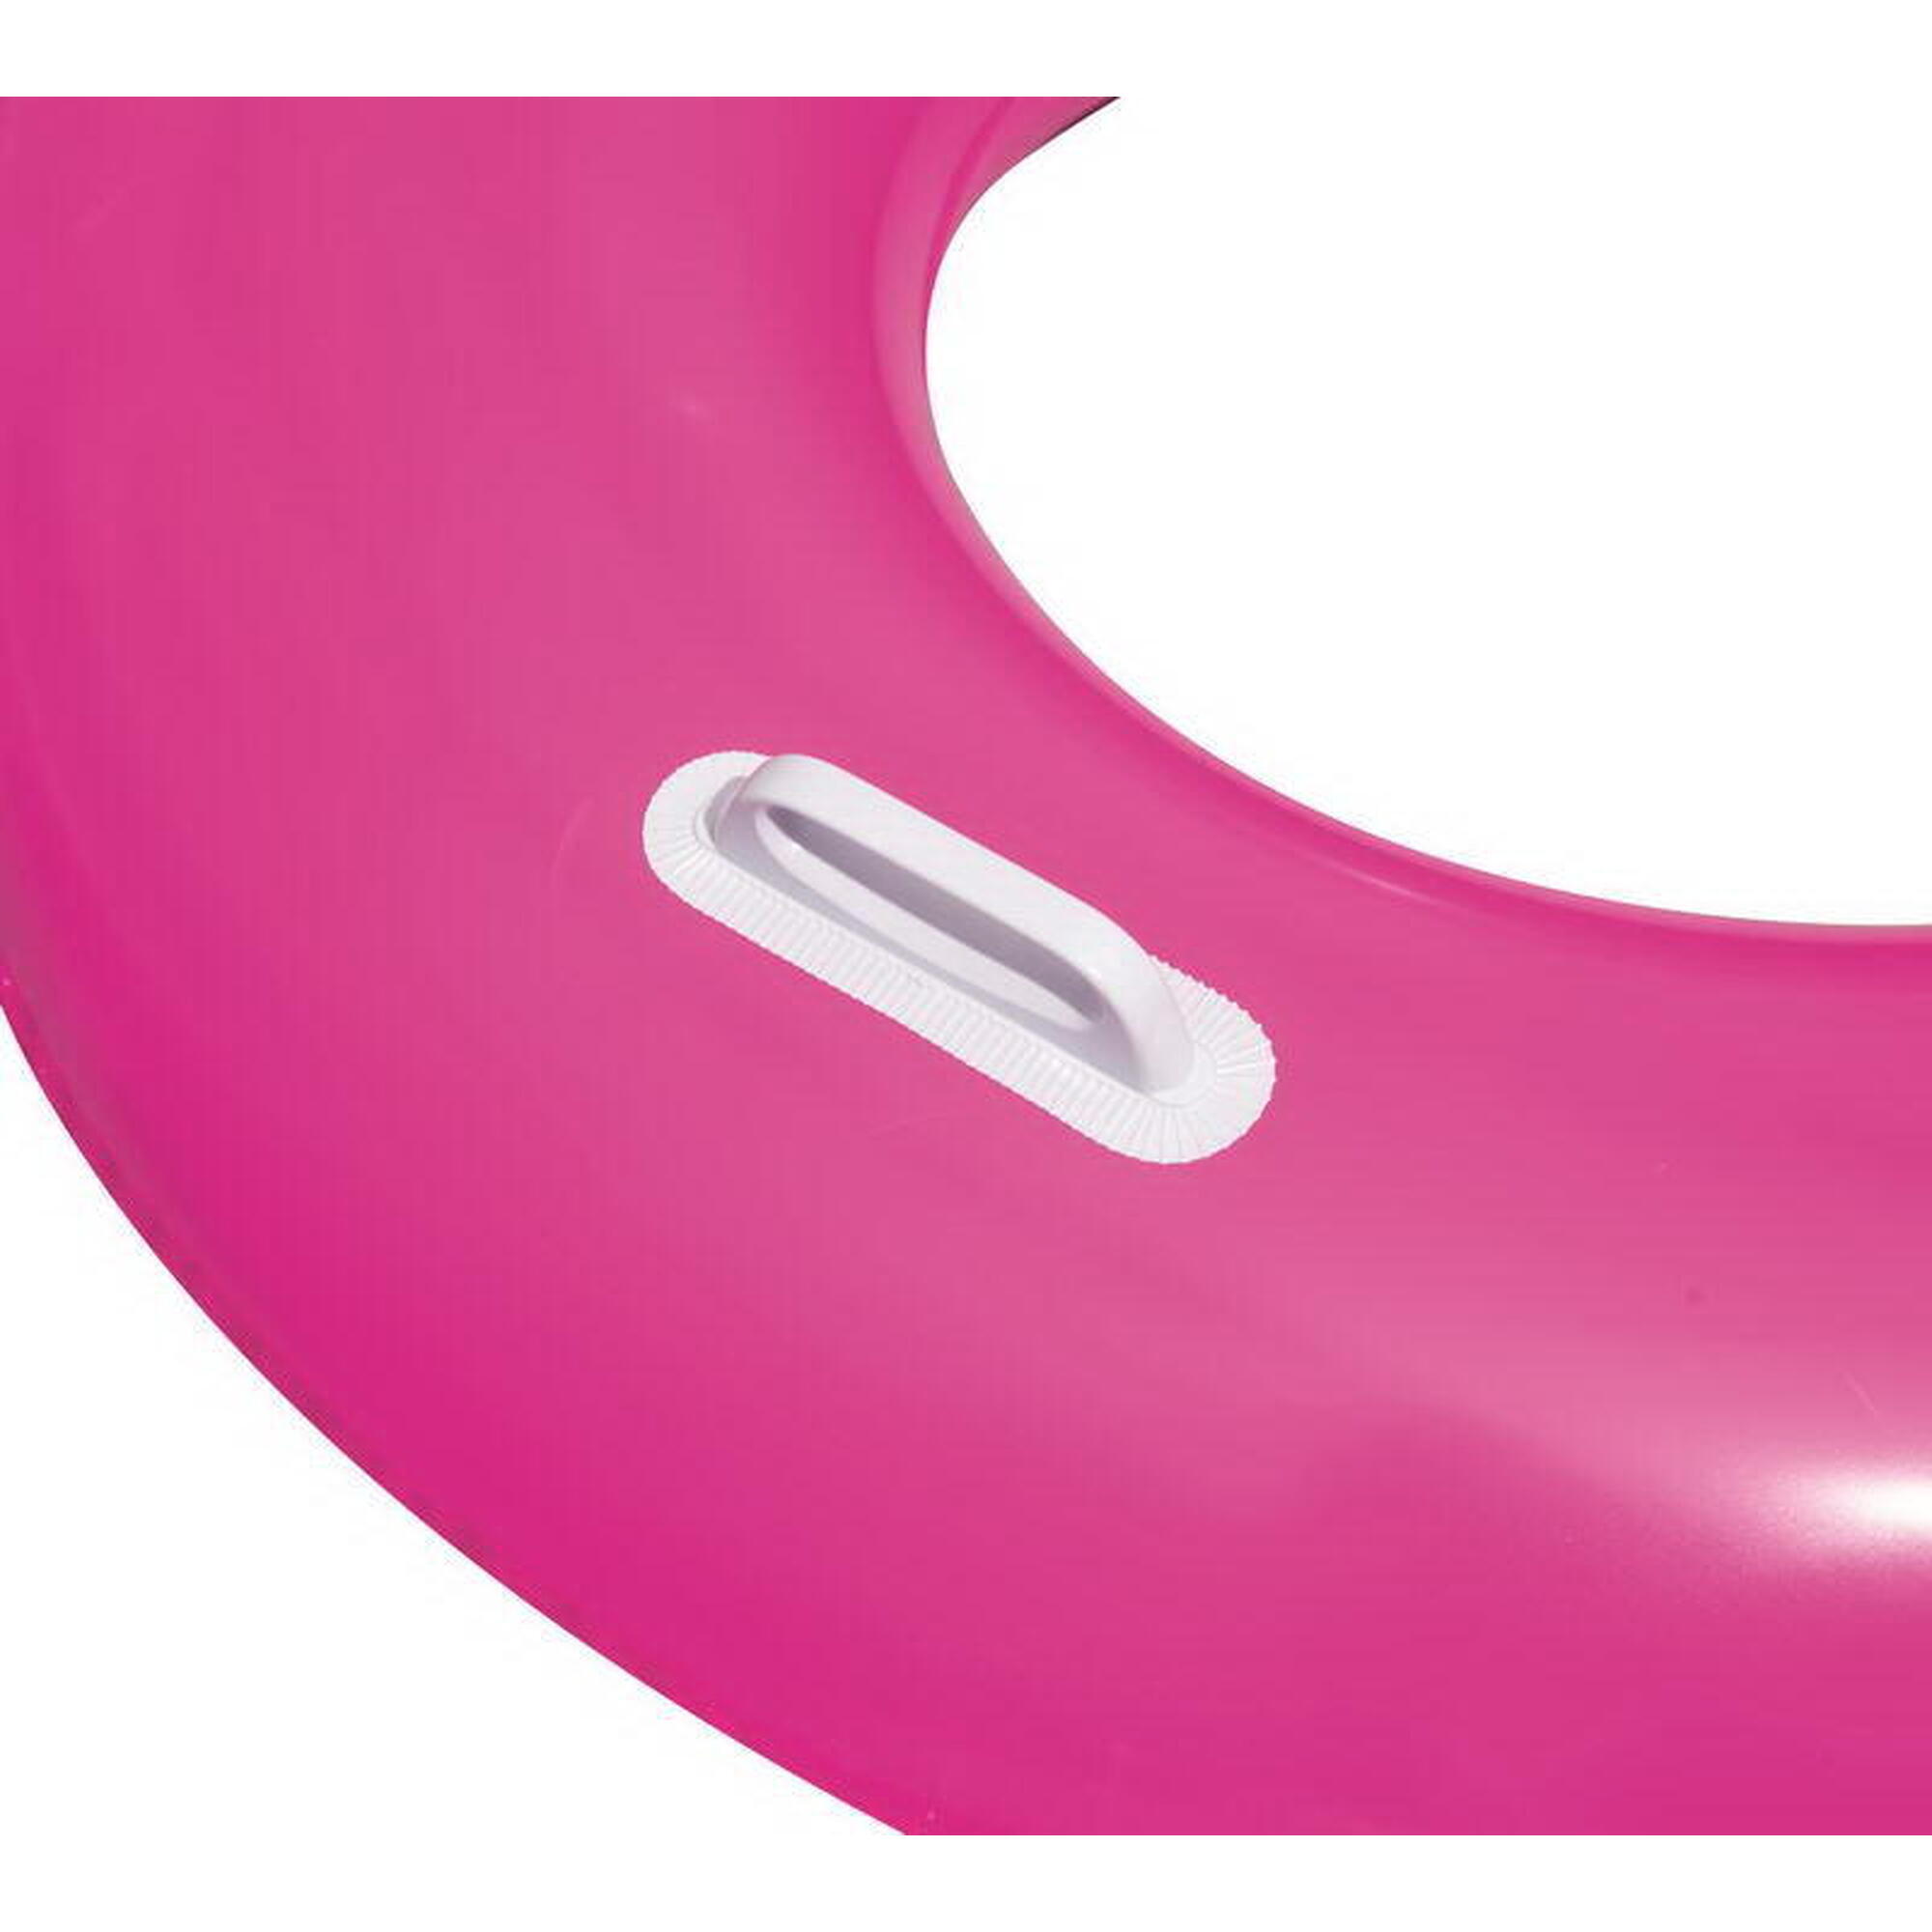 Bestway Swim Ring with Handles 36" - Pink